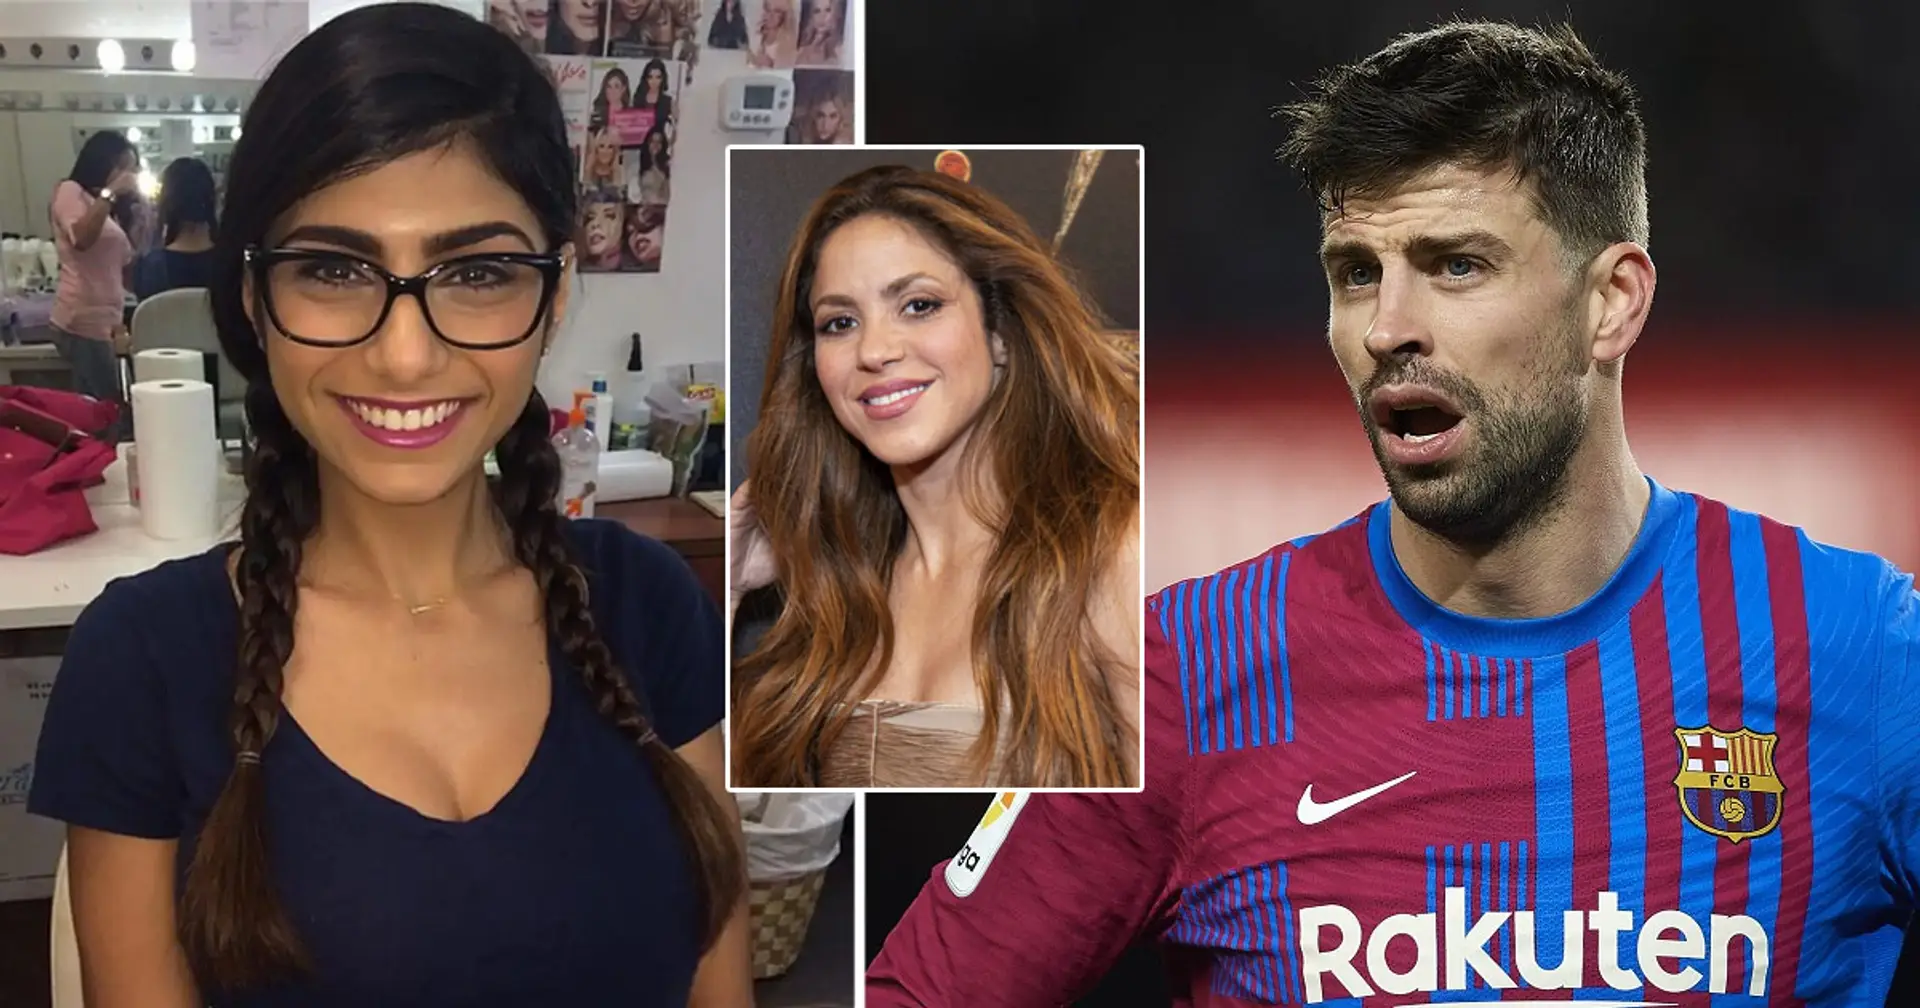 Kalepaxxx - Piqueâ€¦. Feminism': Former porn star Mia Khalifa reacts to Shakira's  Instagram activity after break-up - Football | Tribuna.com